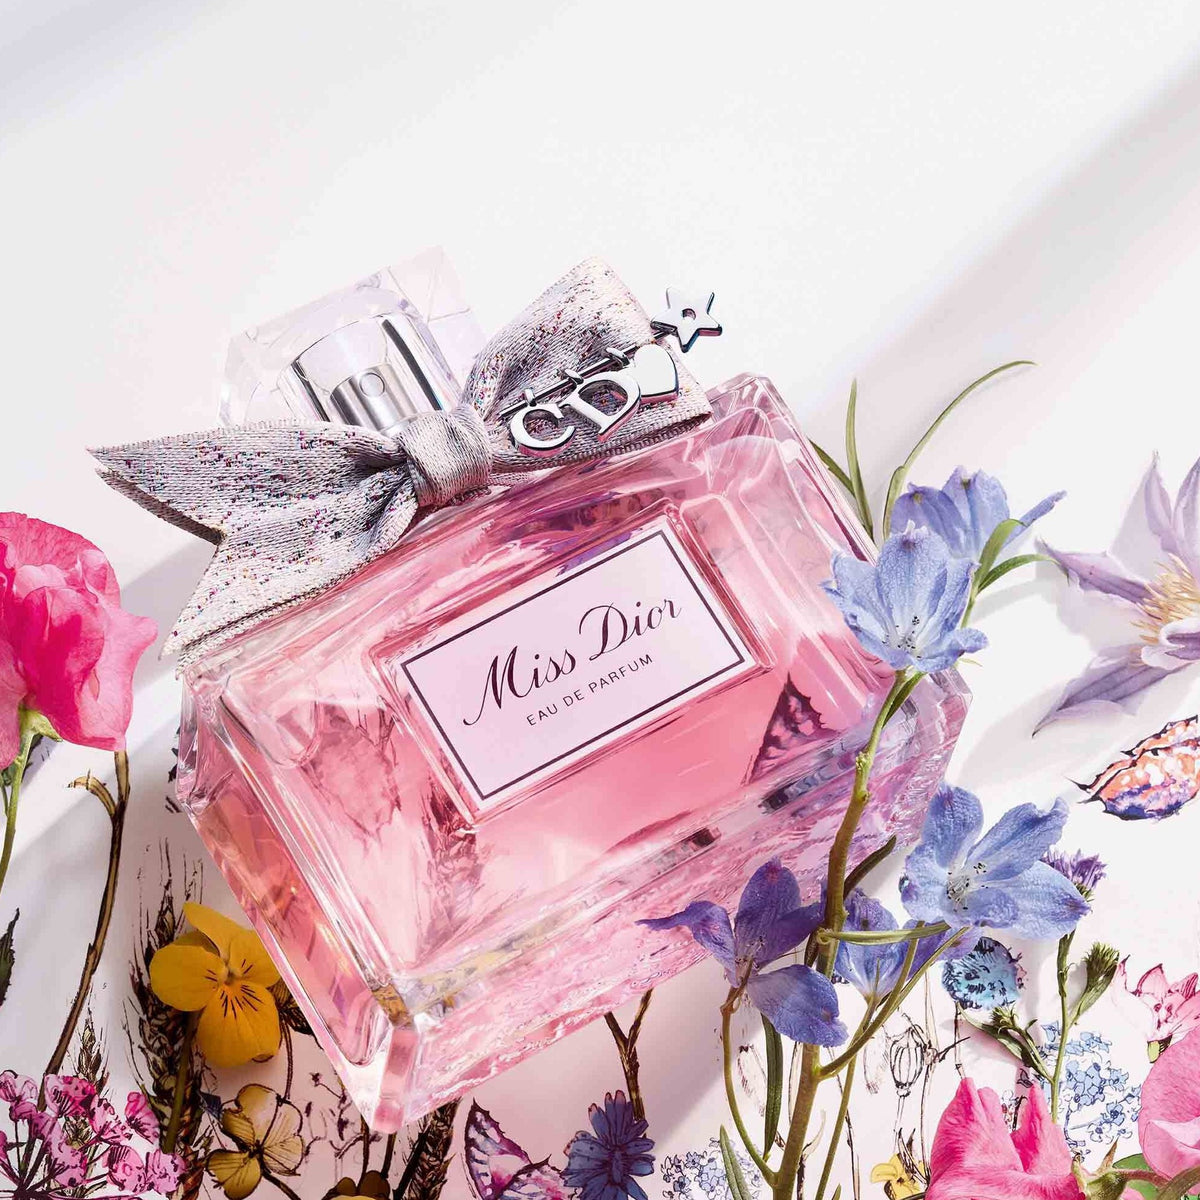 Dior (Christian Dior) Miss Dior Blooming Bouquet Eau de Toilette